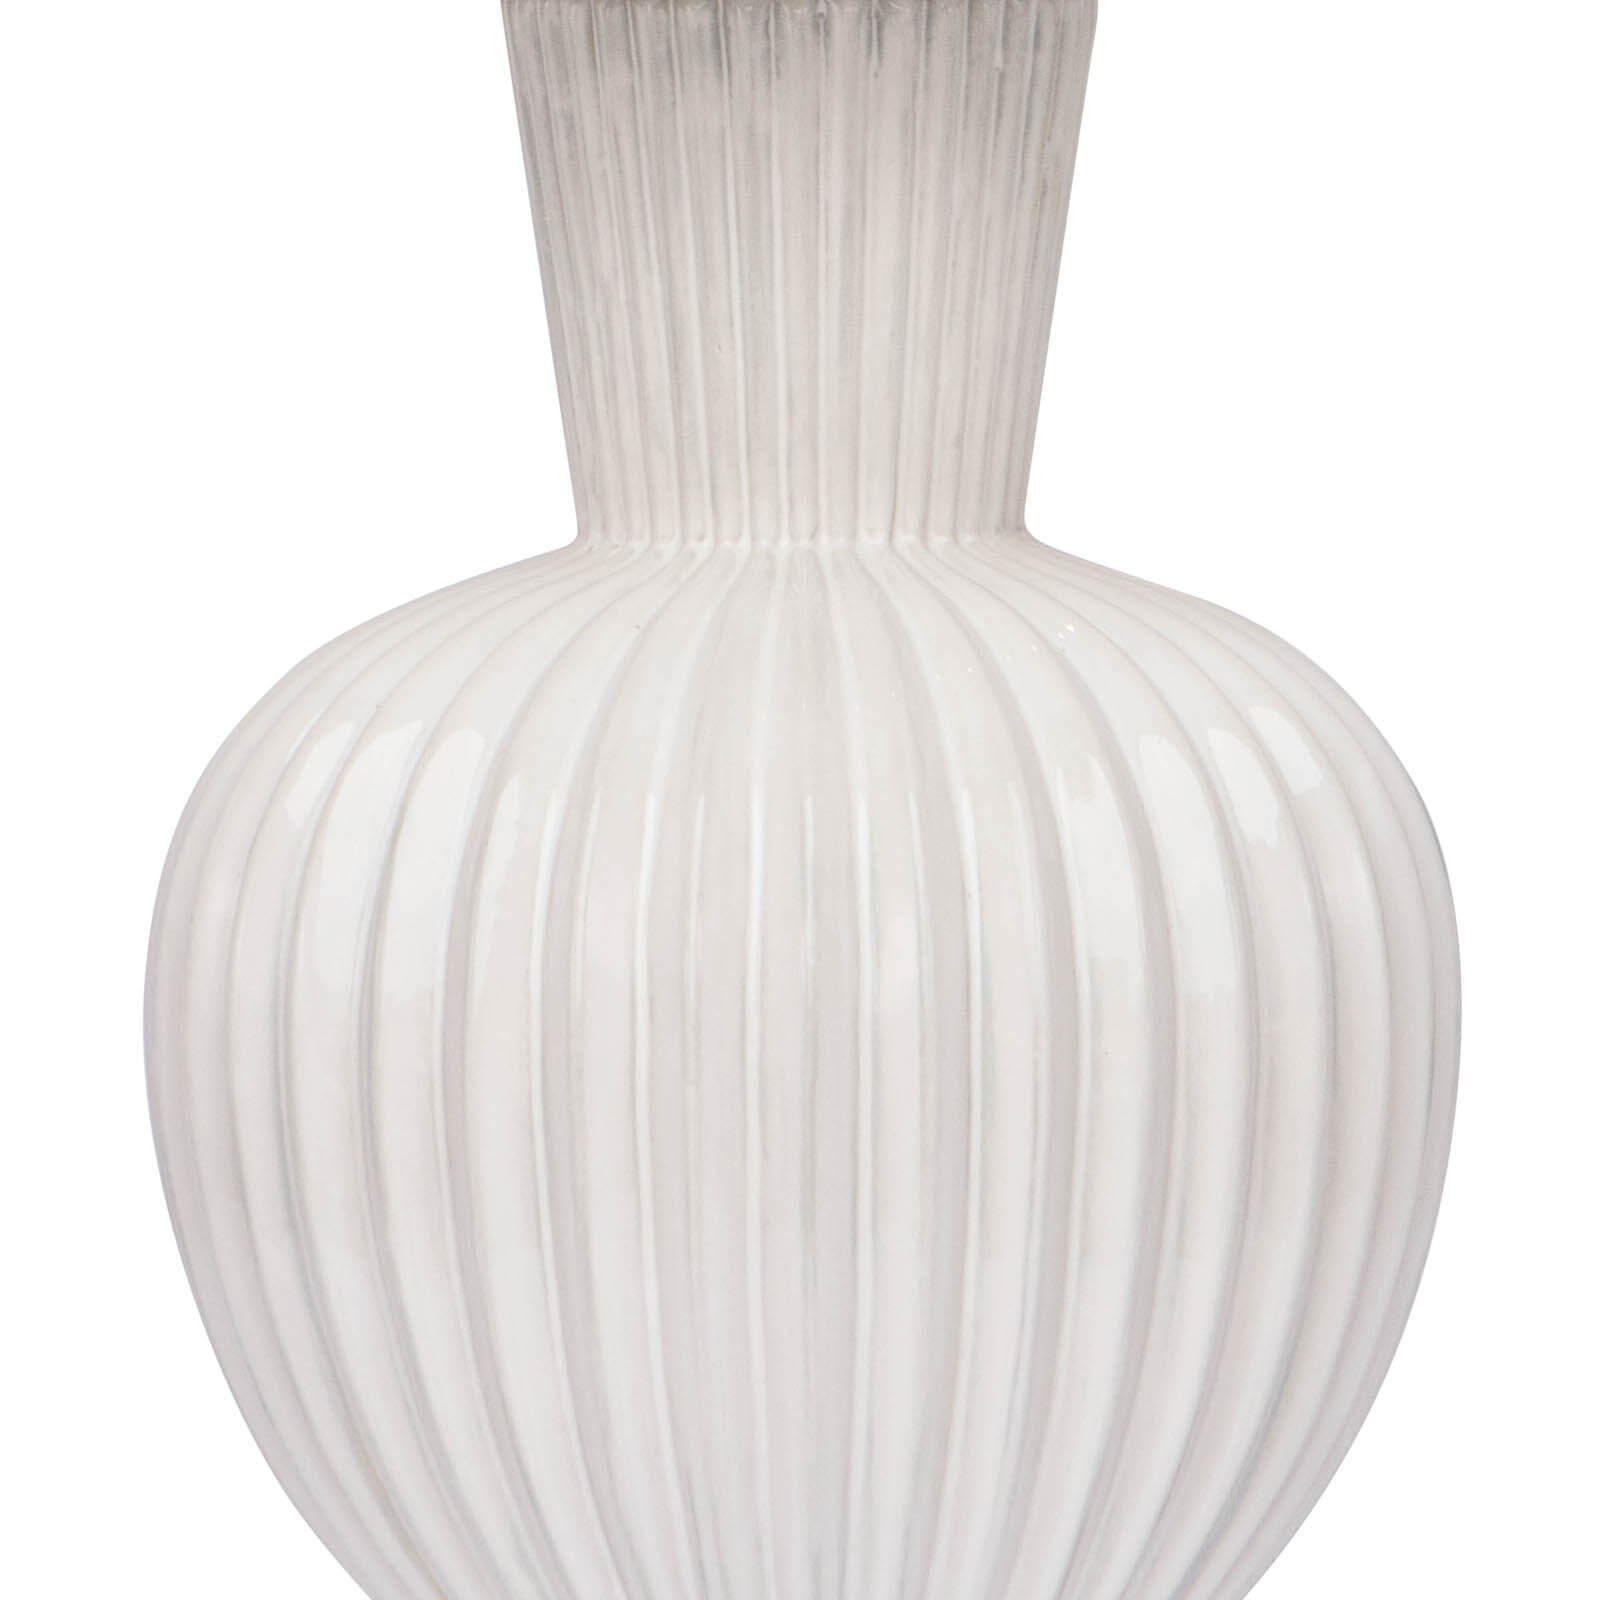 Regina Andrew Madrid Ceramic Table Lamp in White